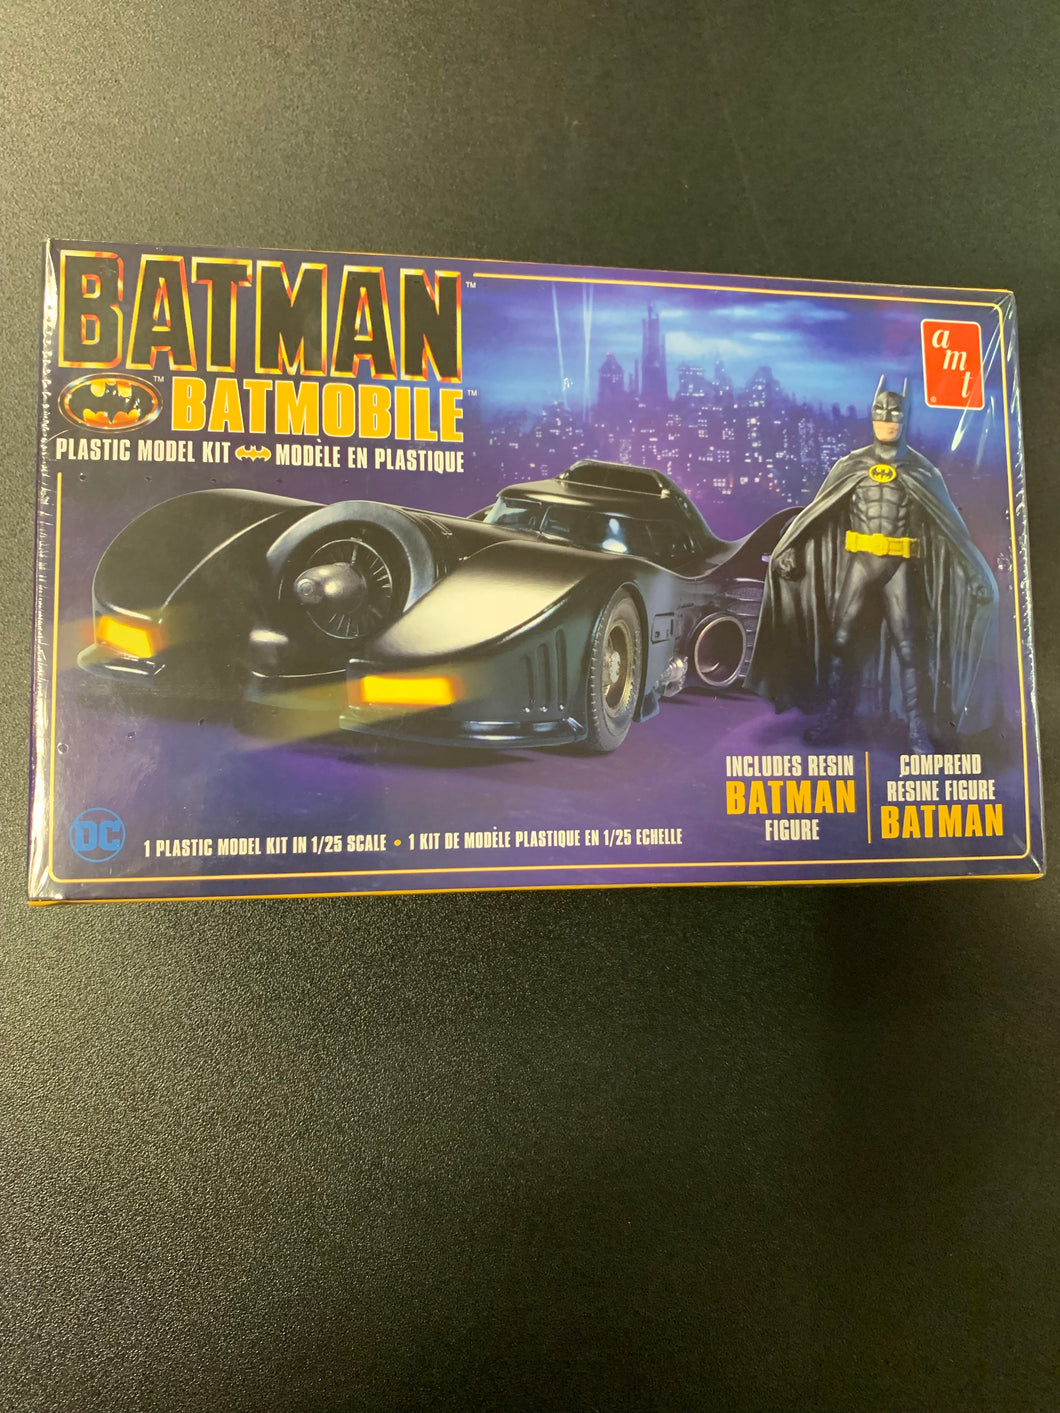 AMT BATMAN BATMOBILE PLASTIC MODEL KIT WITH RESIN BATMAN FIGURE